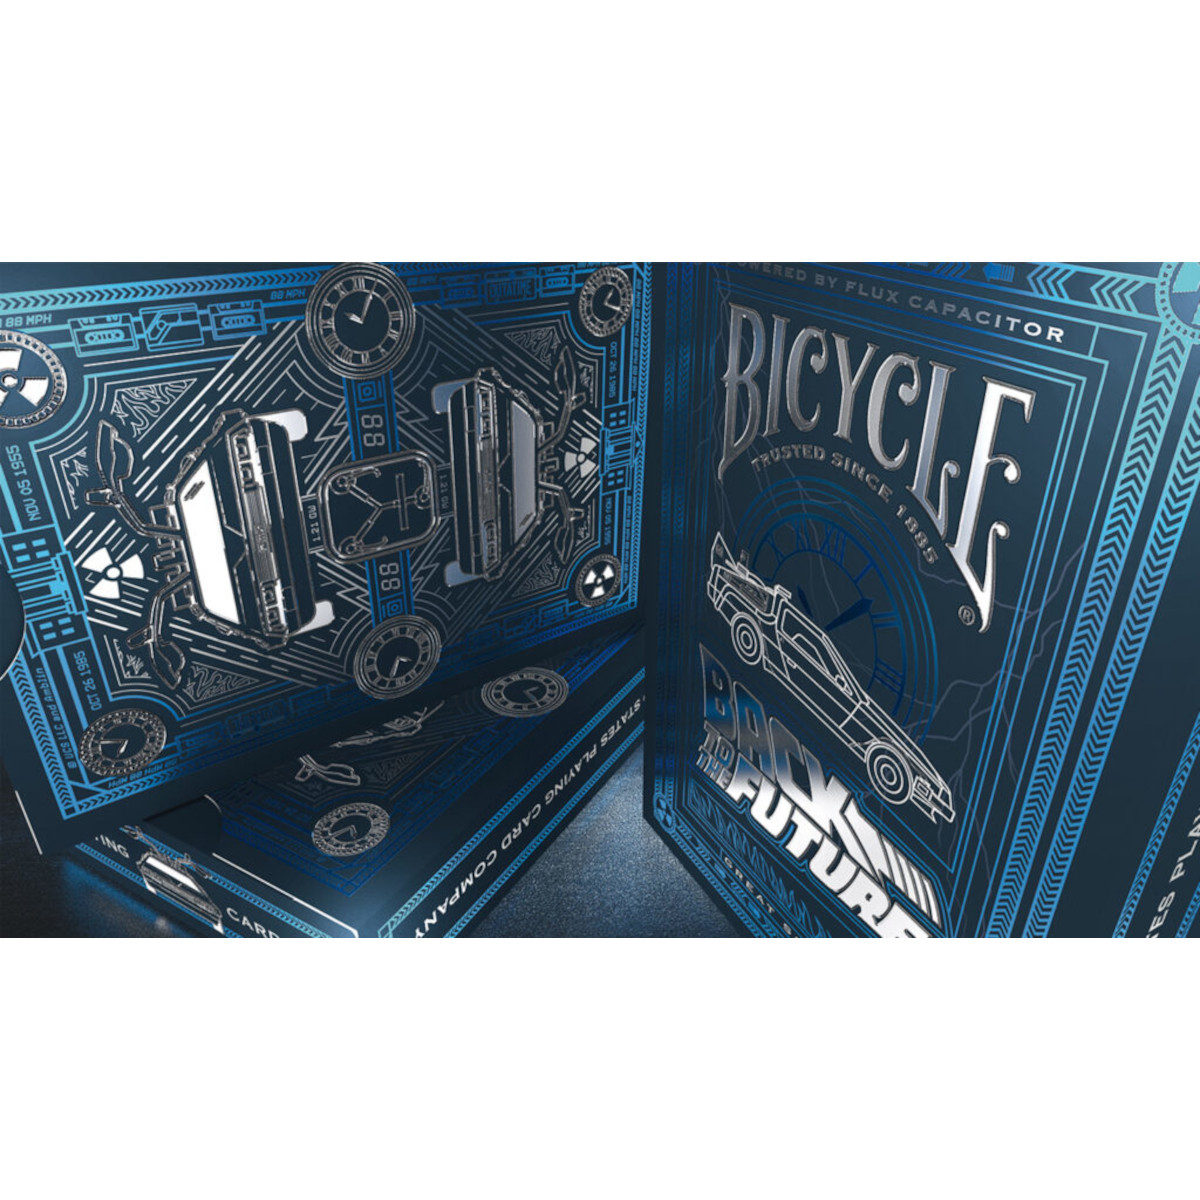 ASS ALTENBURGER to Future Kartenspiel Back - the Bicycle Kartendeck